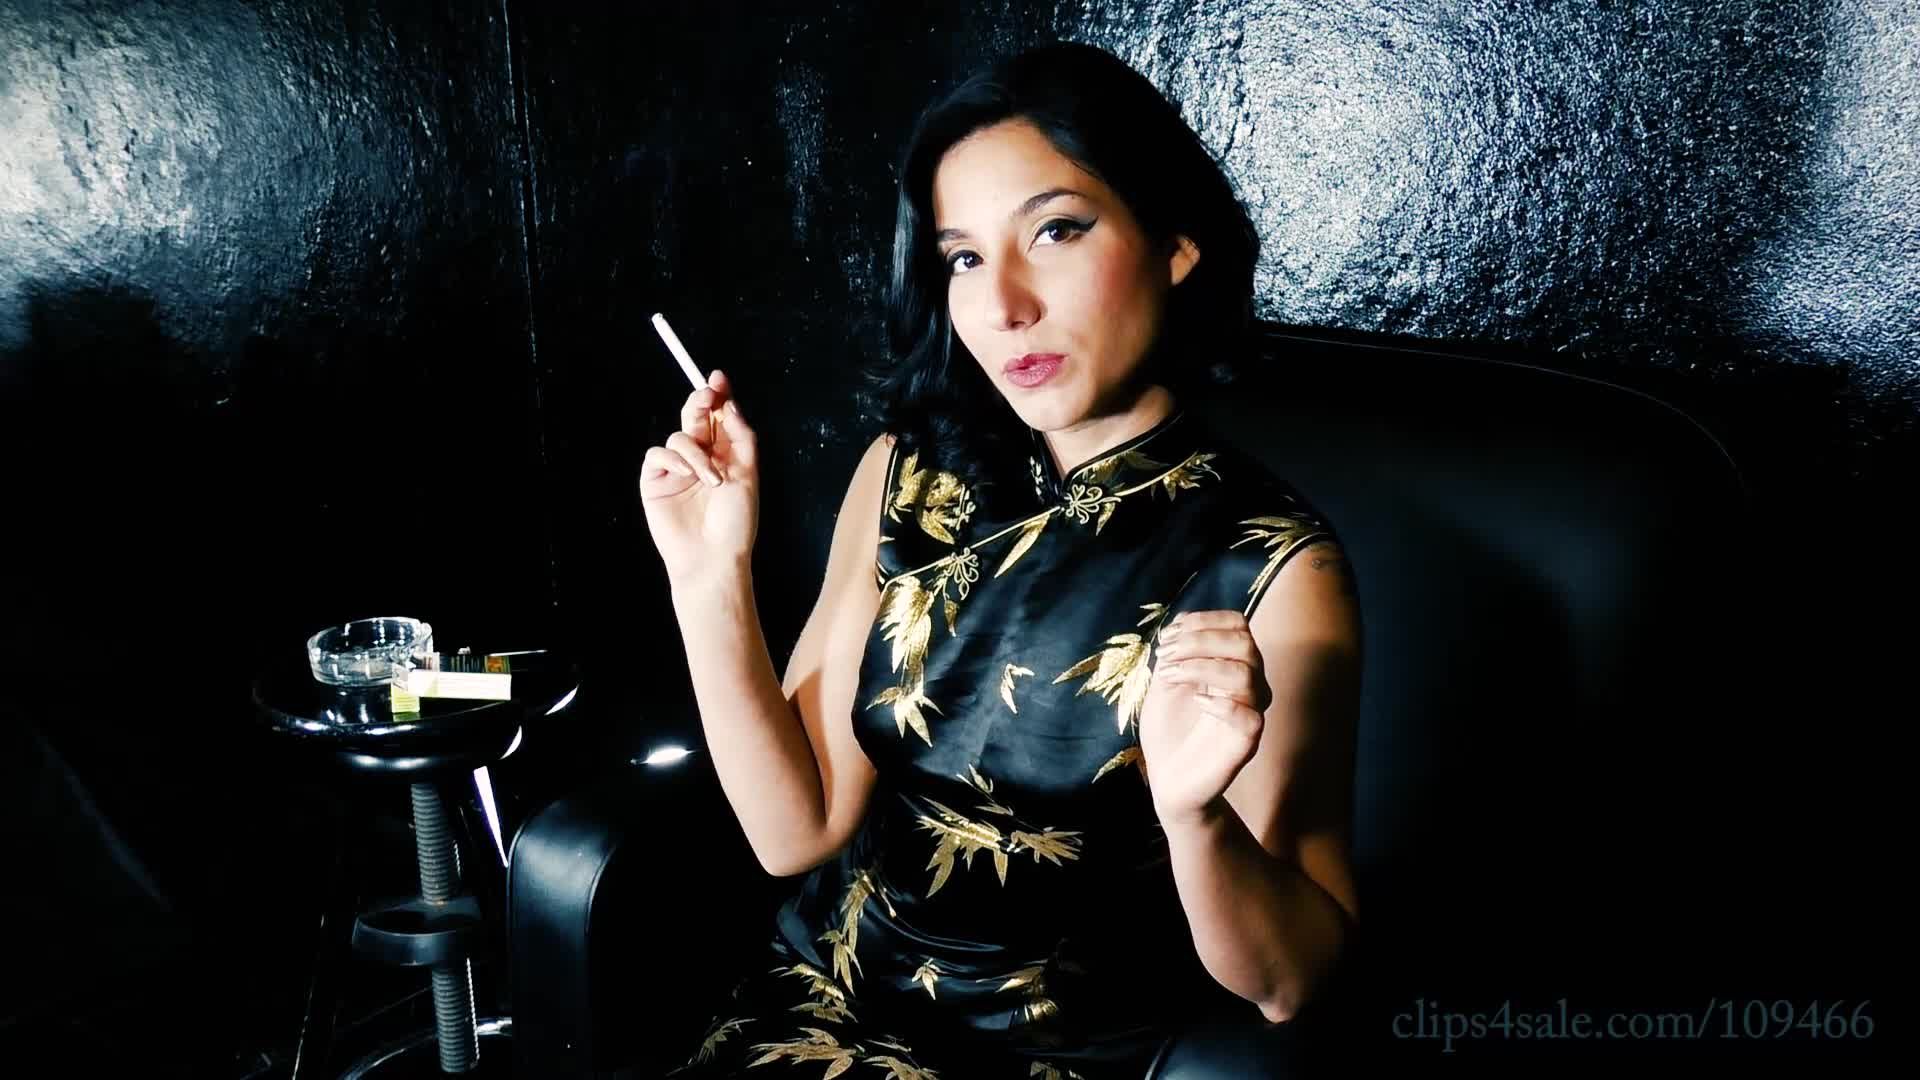 Elegant Dress and Cigarette